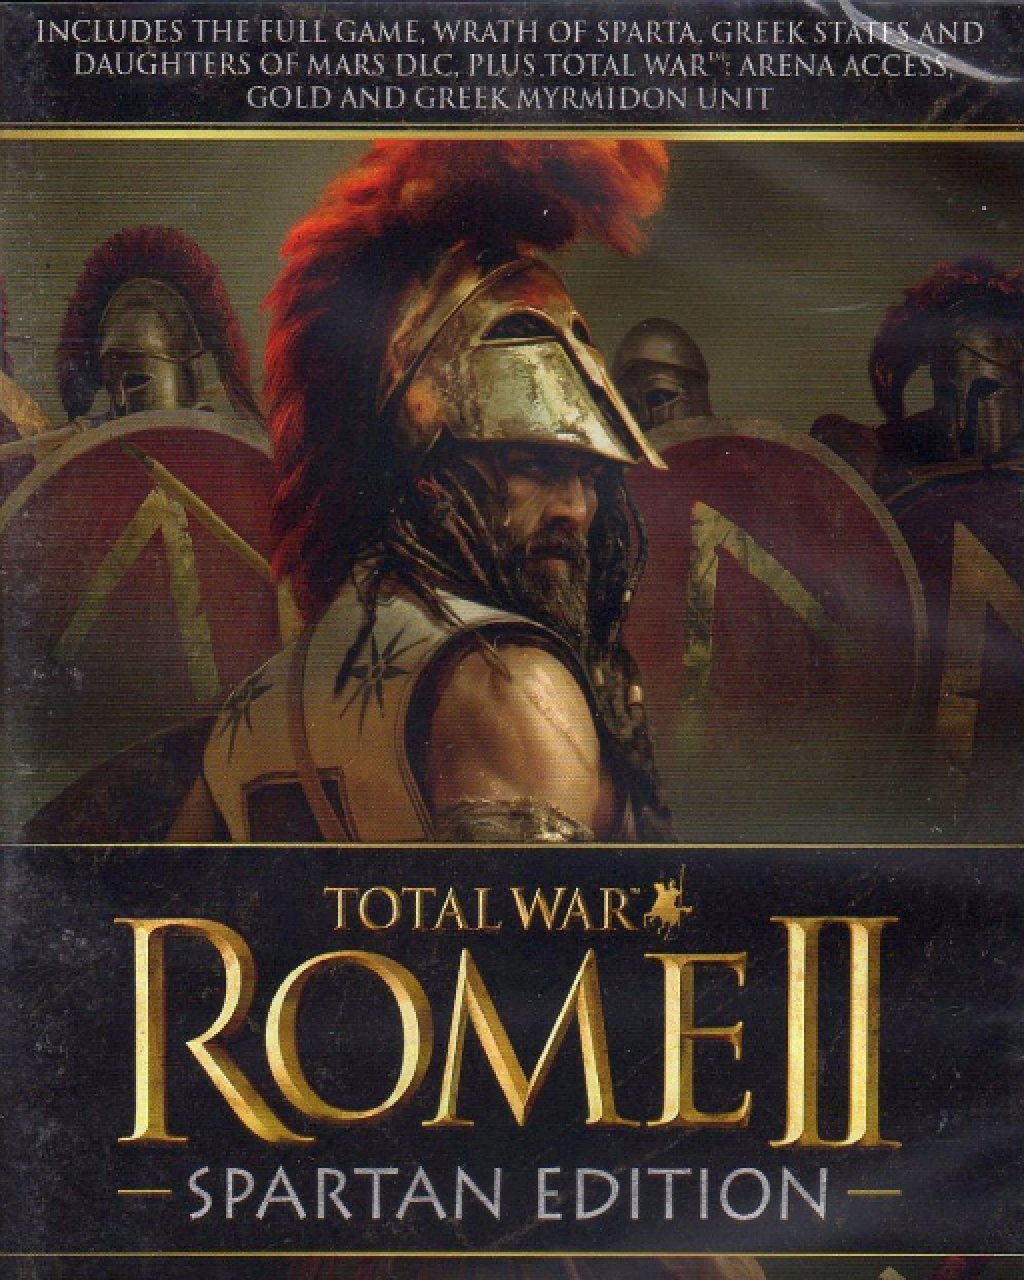 Total War Rome II Spartan Edition